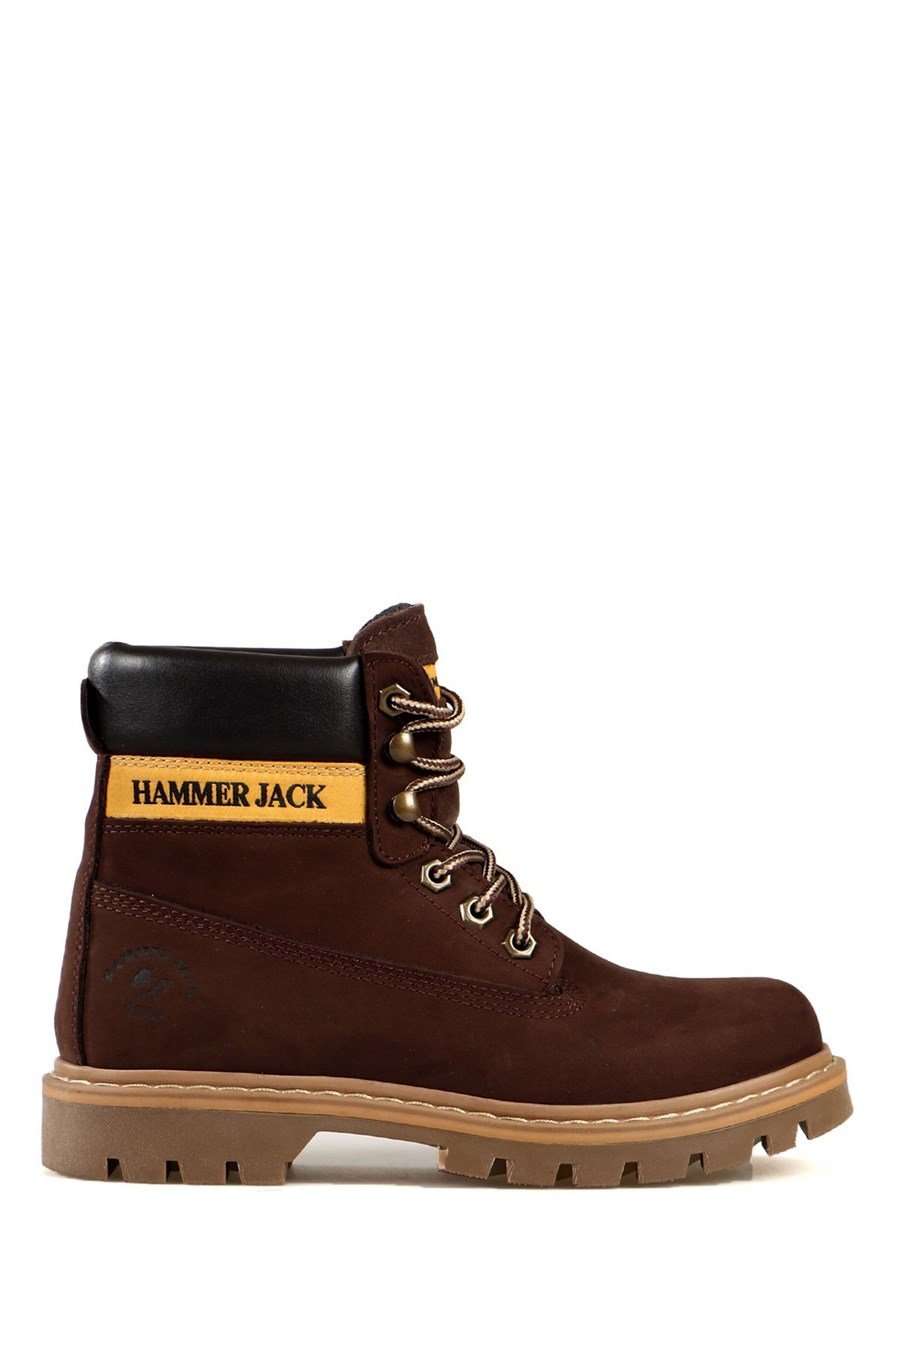 Hammer Jack Kahve Nubuk Erkek Ayakkabı 102 16600-M | 102 16600-M-6